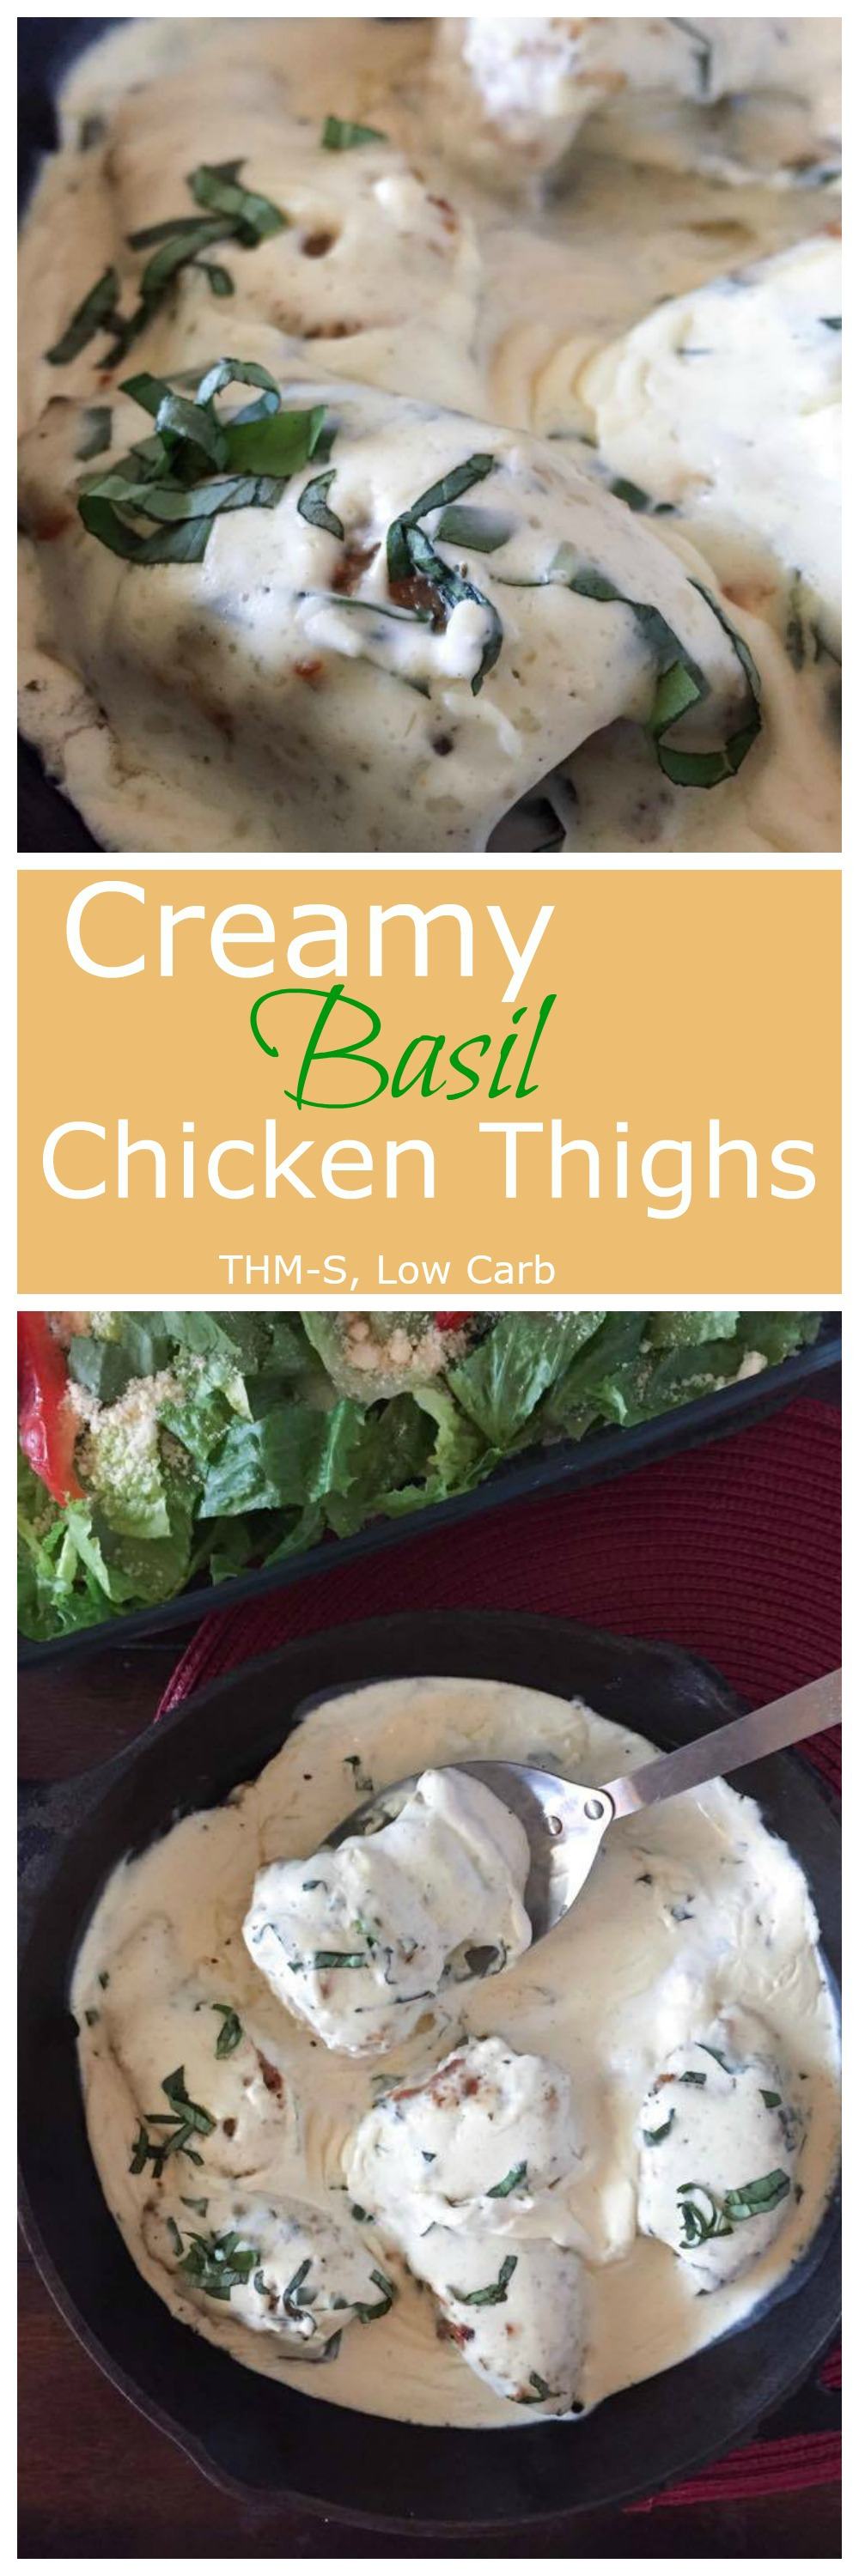 thm-low carb-chicken-basil-trim healthy mama